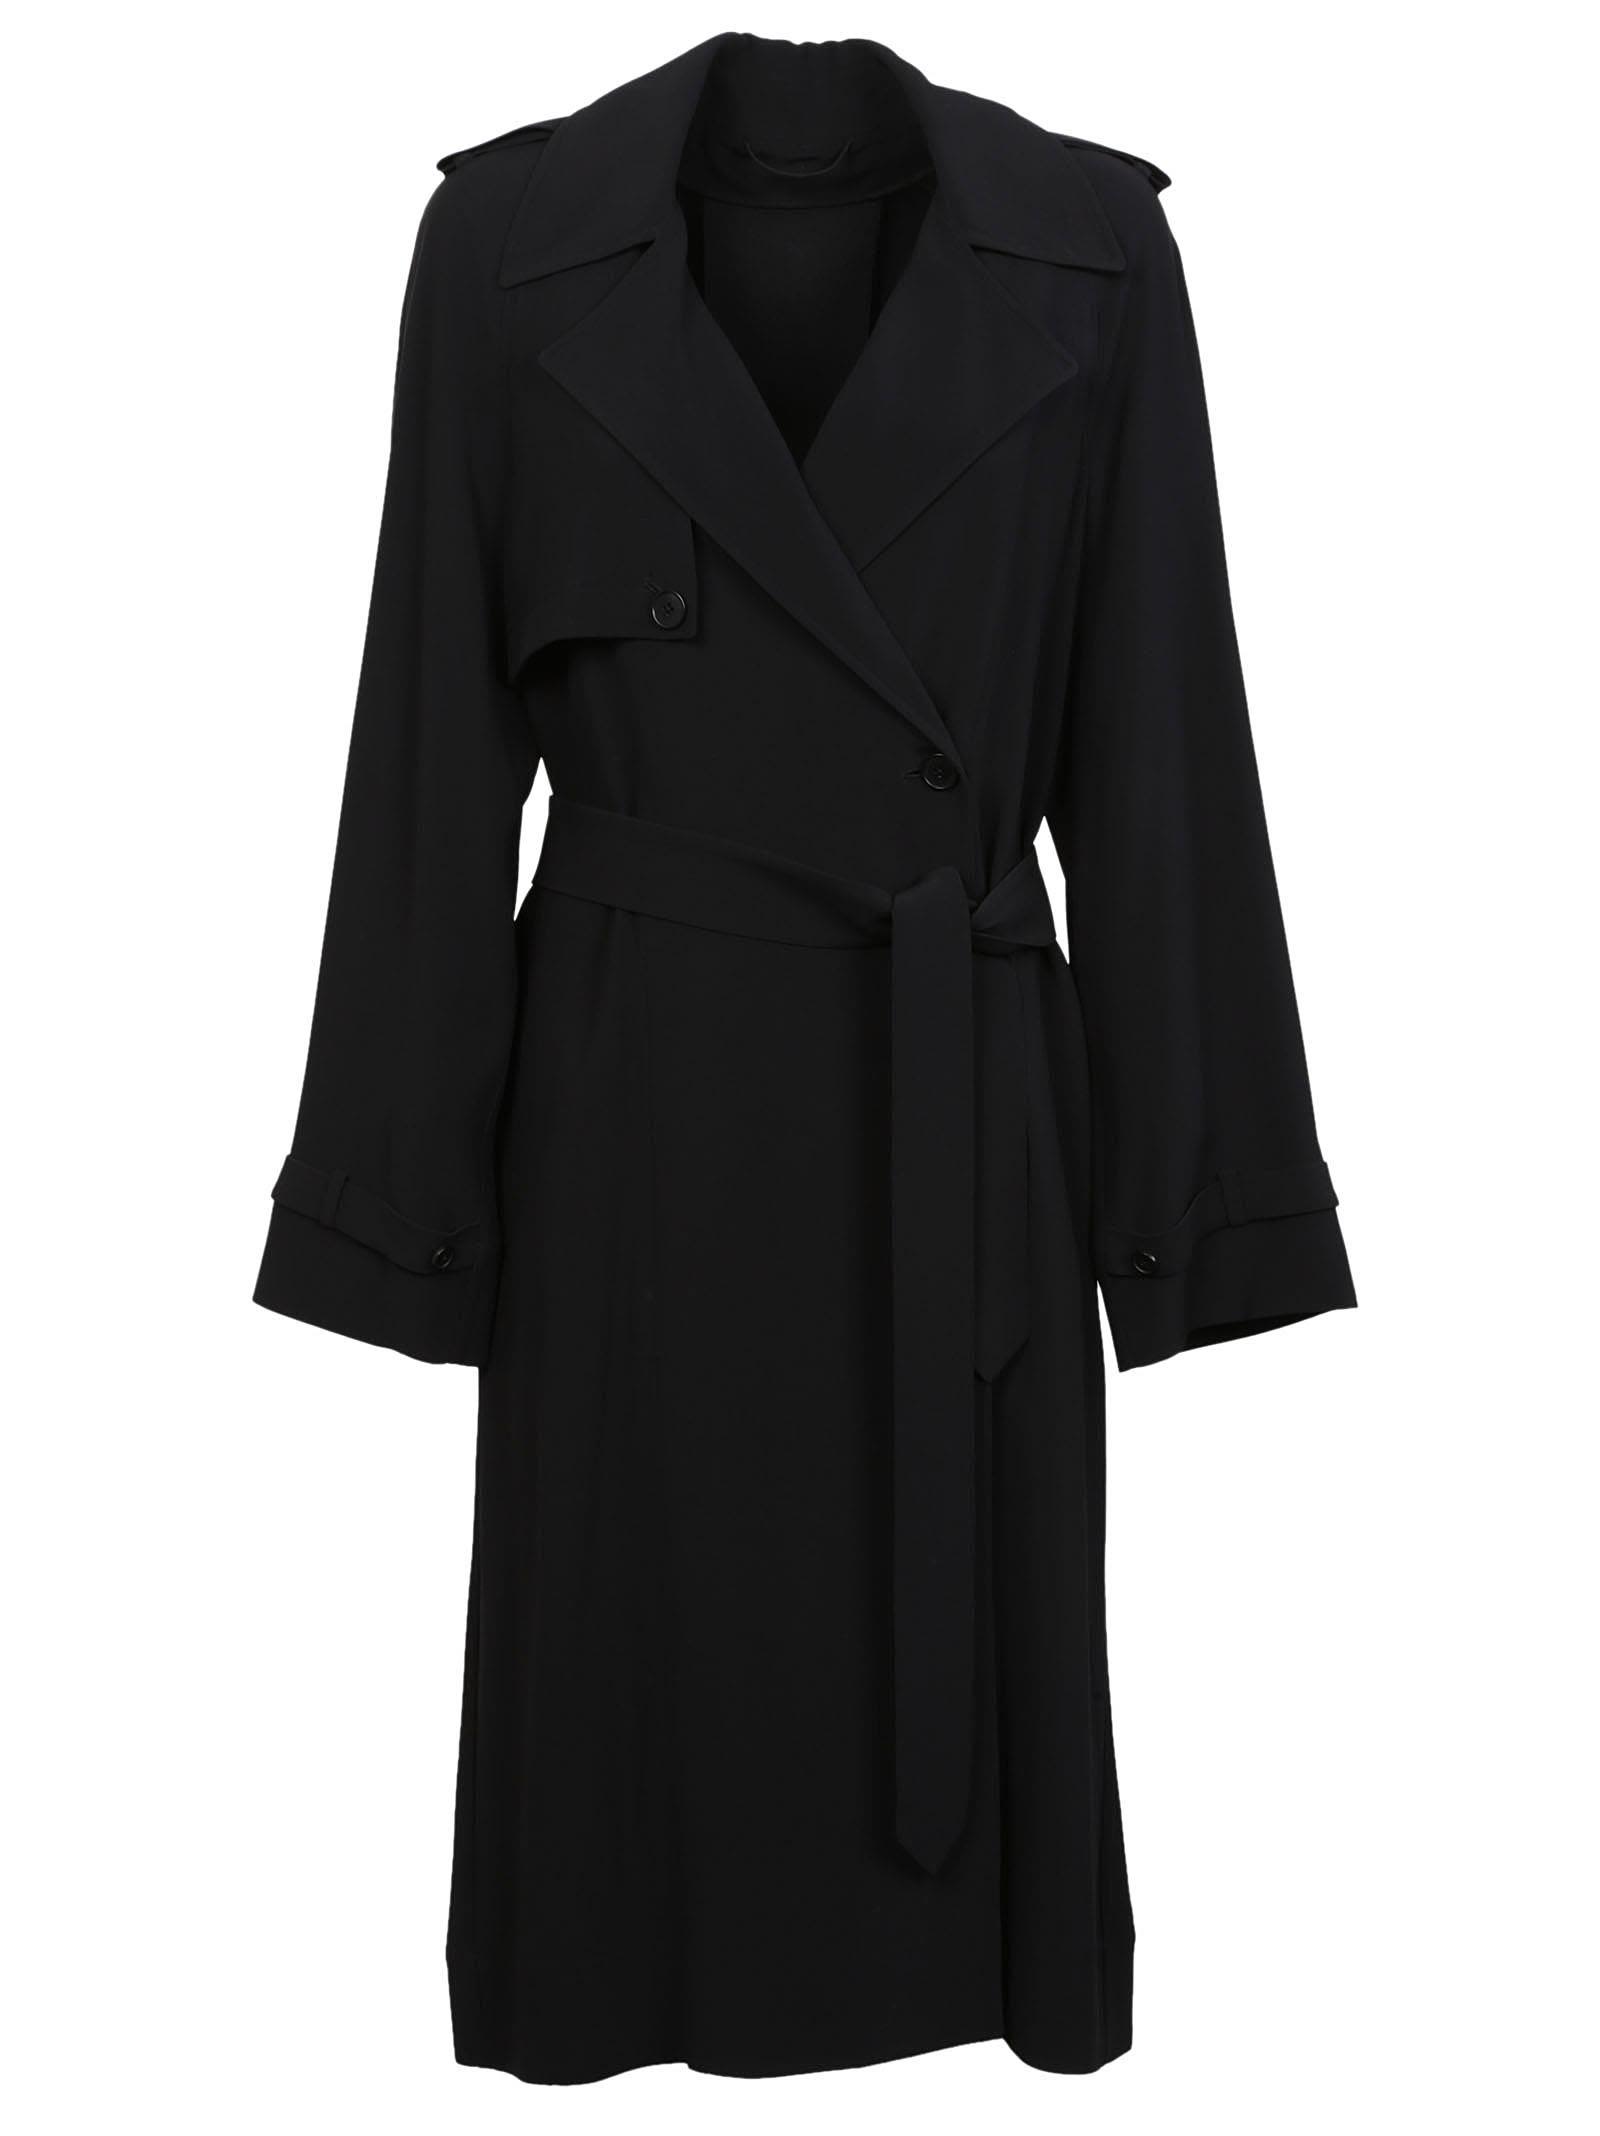 Helmut Lang - Helmut Lang Belted Coat - Black, Women's Coats | Italist